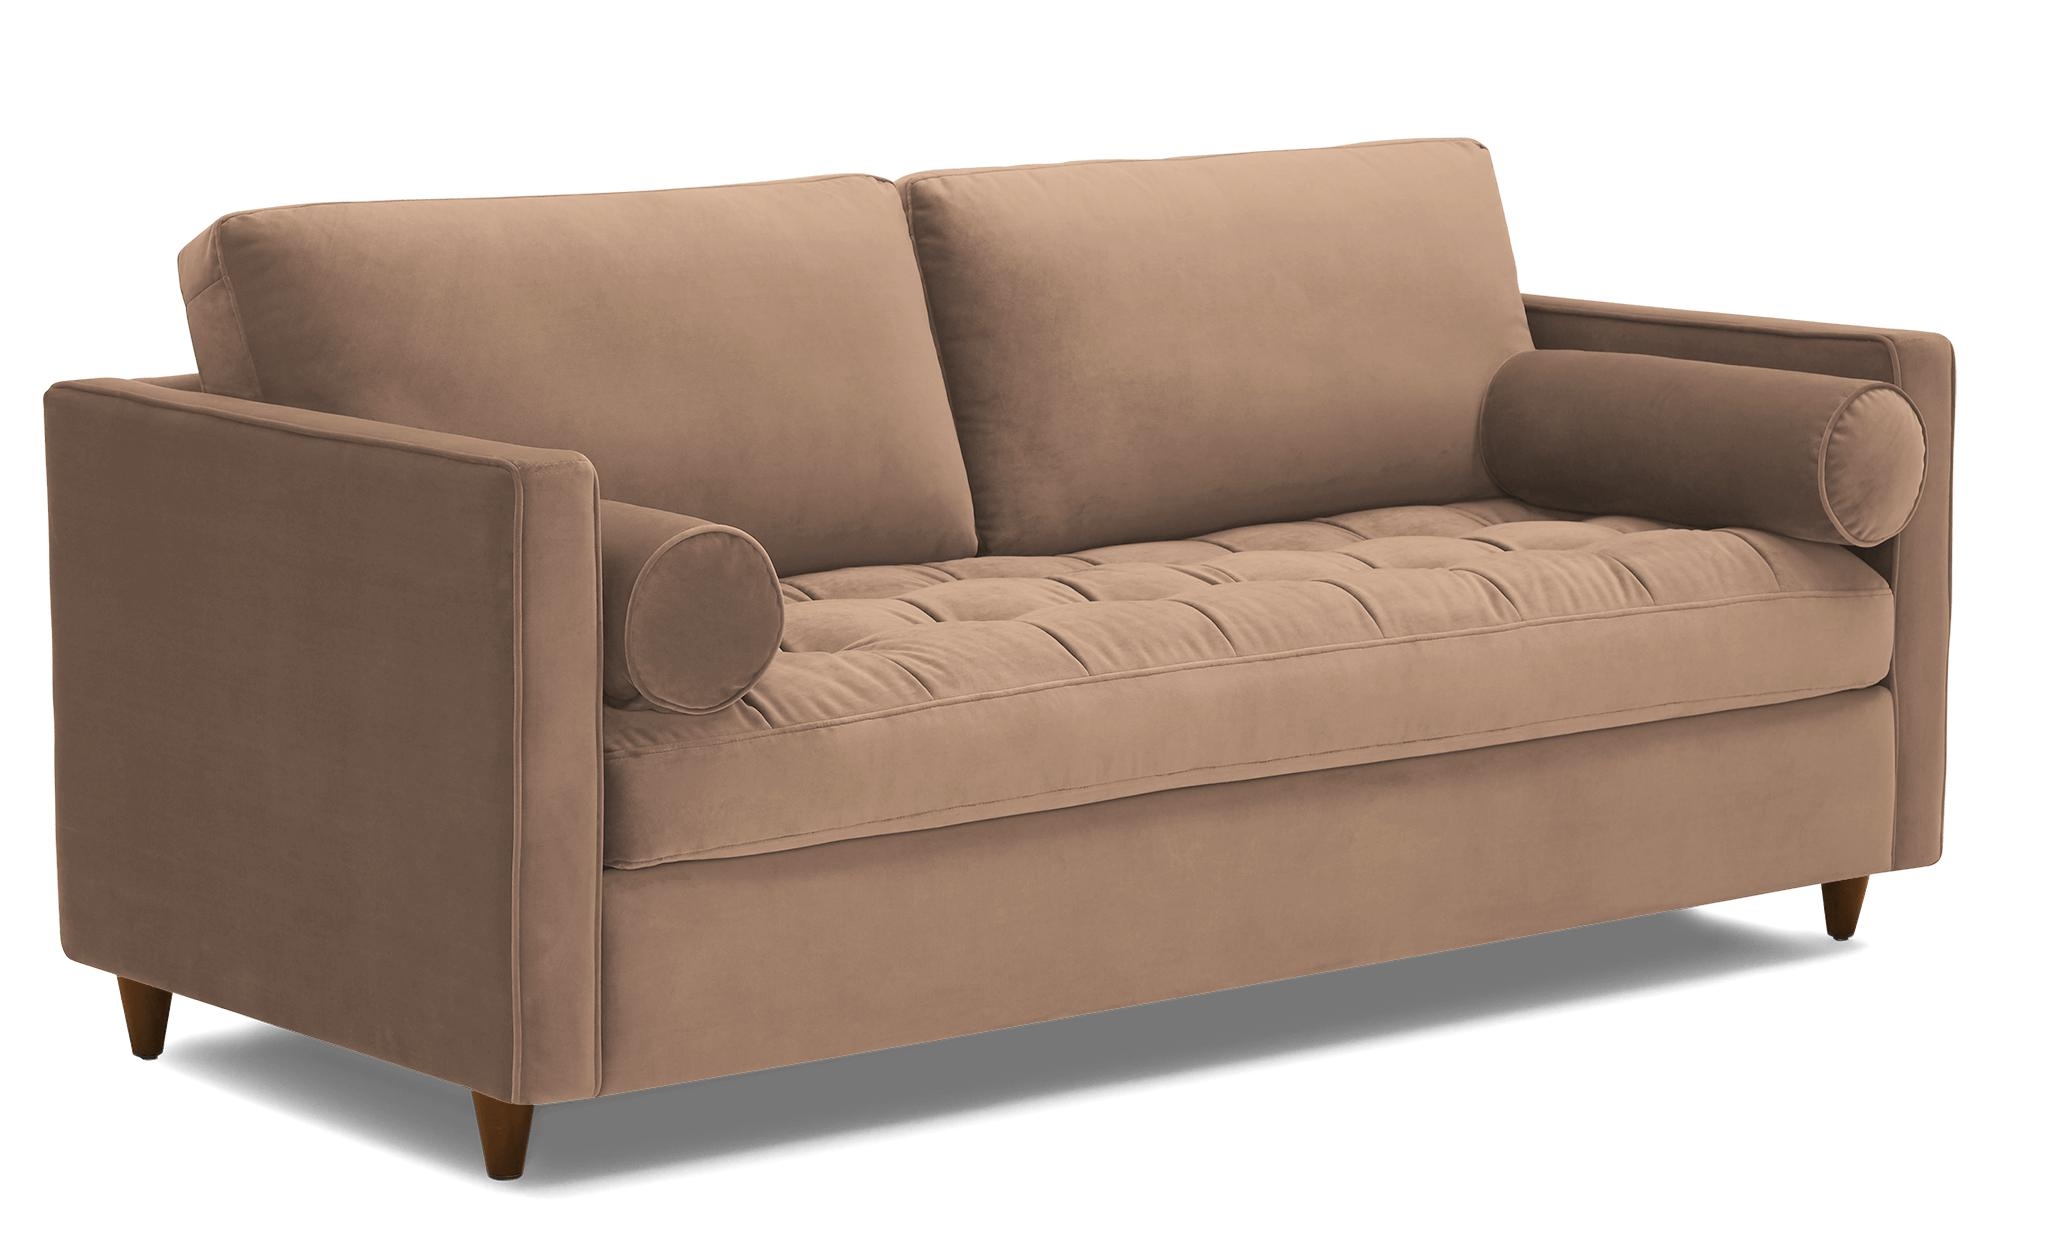 Pink Briar Mid Century Modern Sleeper Sofa - Royale Blush - Mocha - Image 1